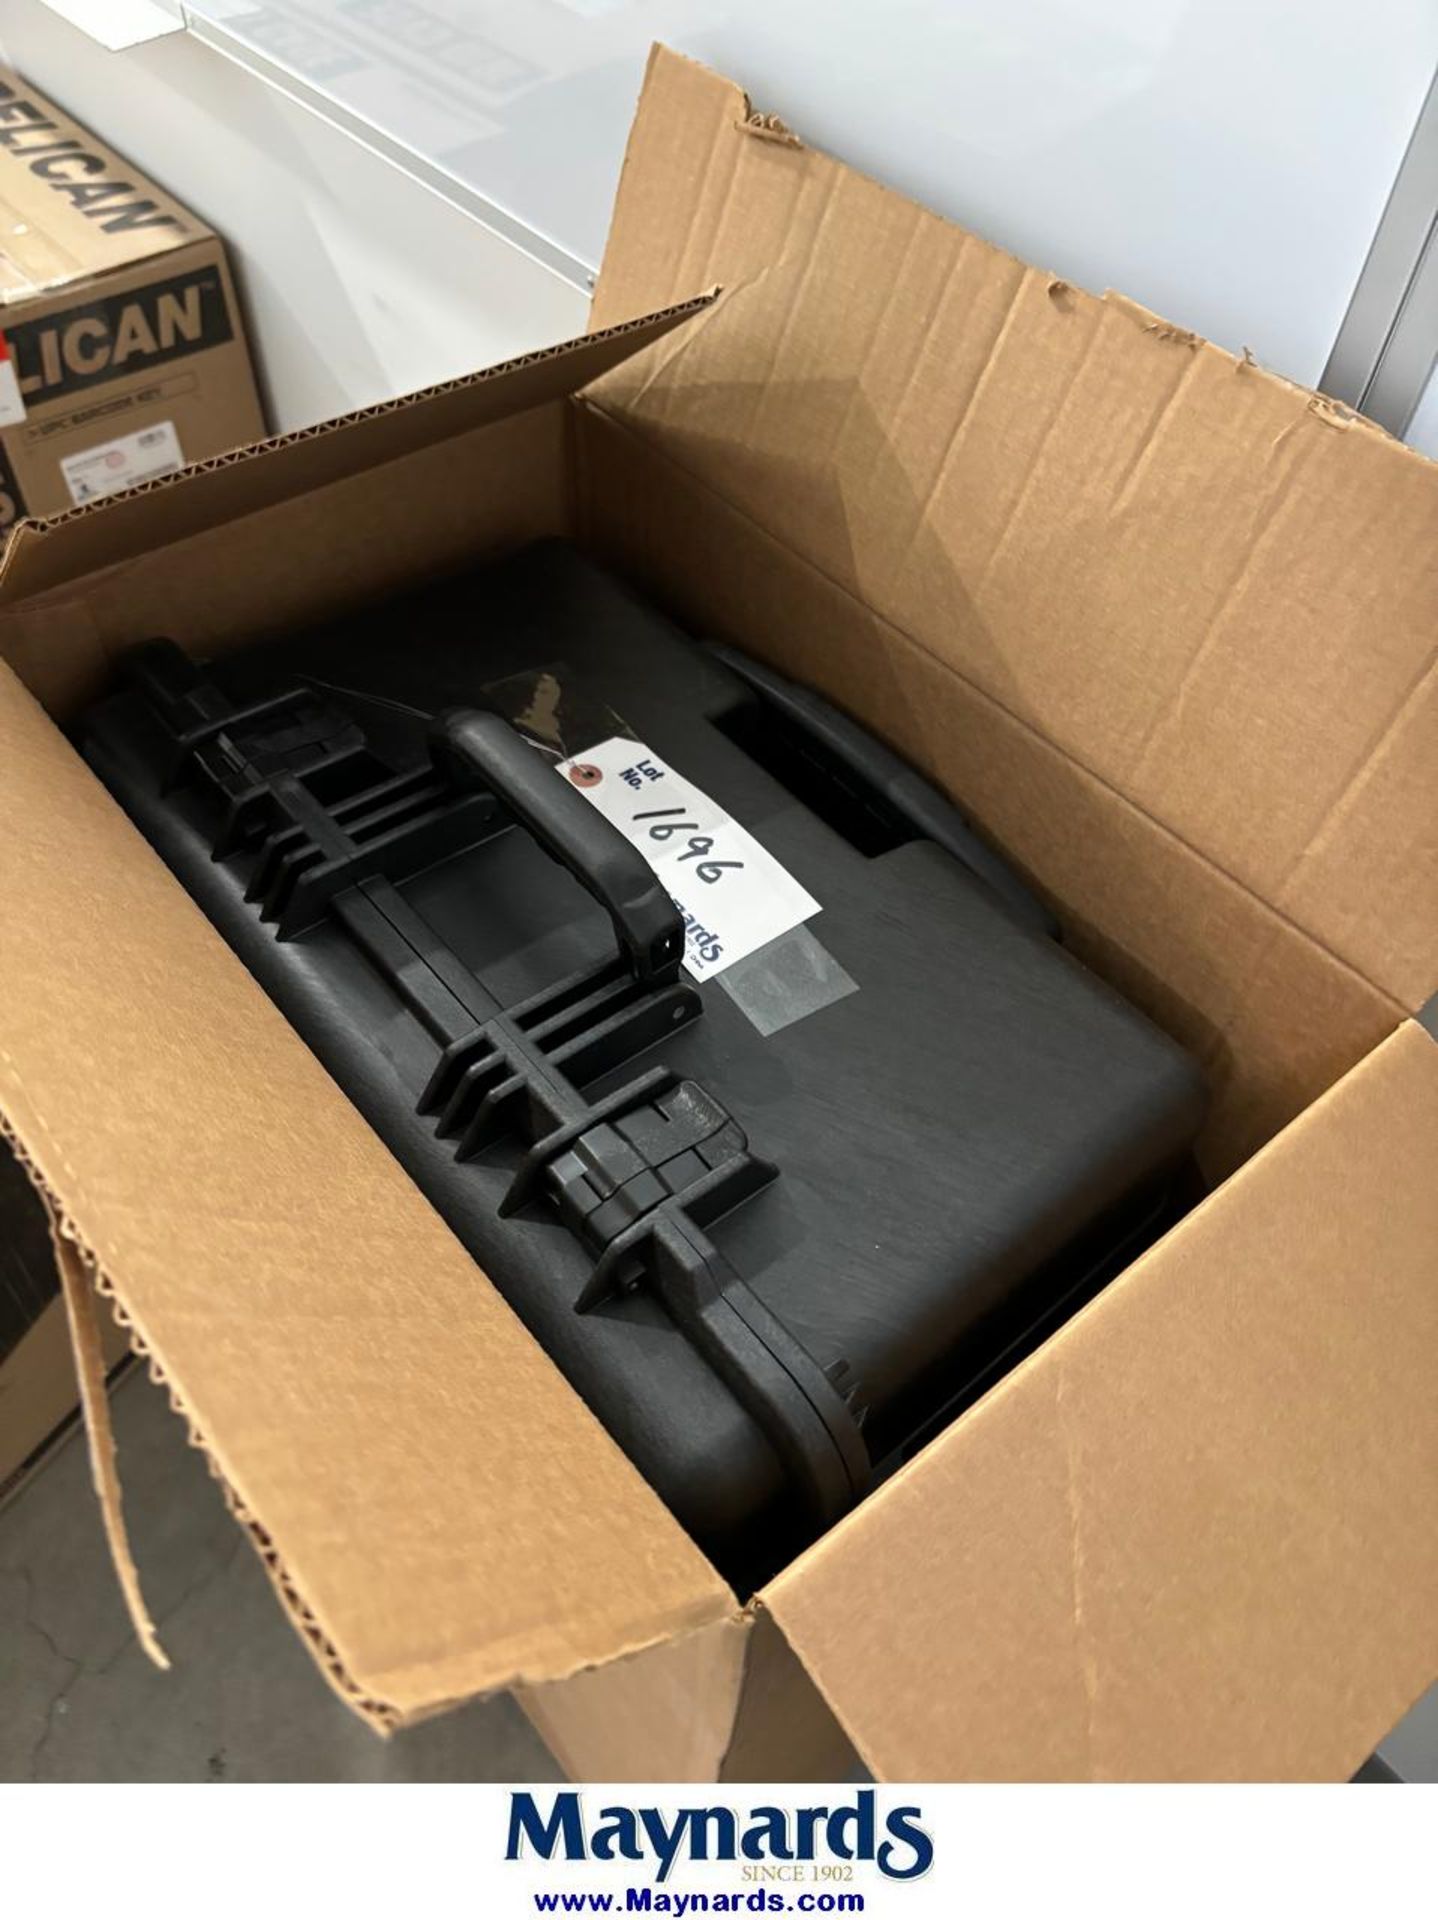 Pelican 1650 cases new in box